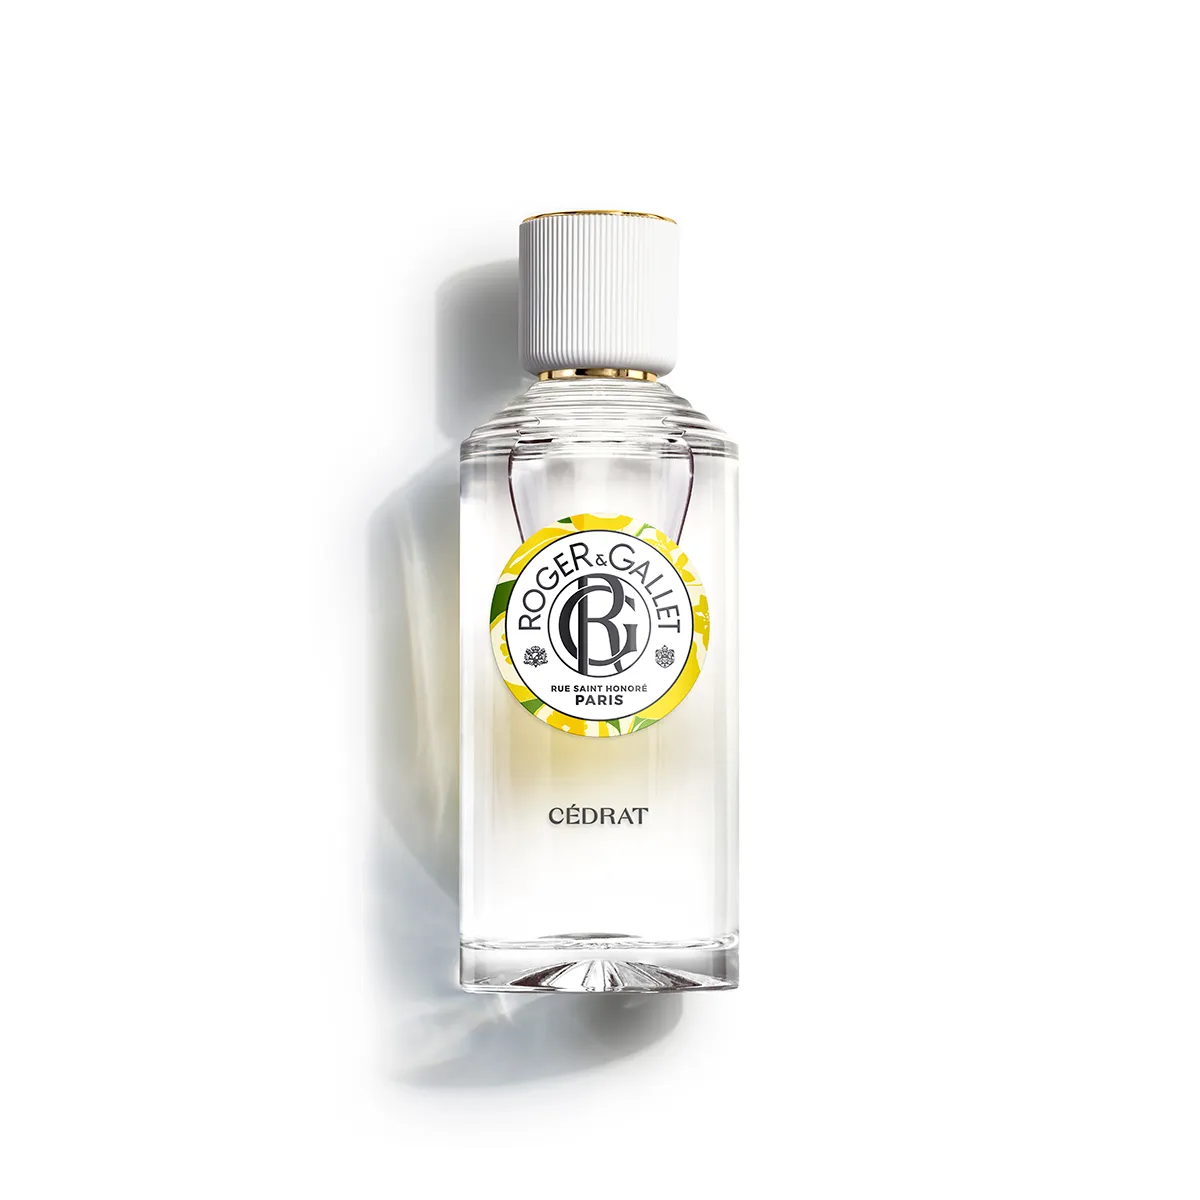 R&G Cedrat Eau Parfumée 100 ml Acqua profumata di benessere